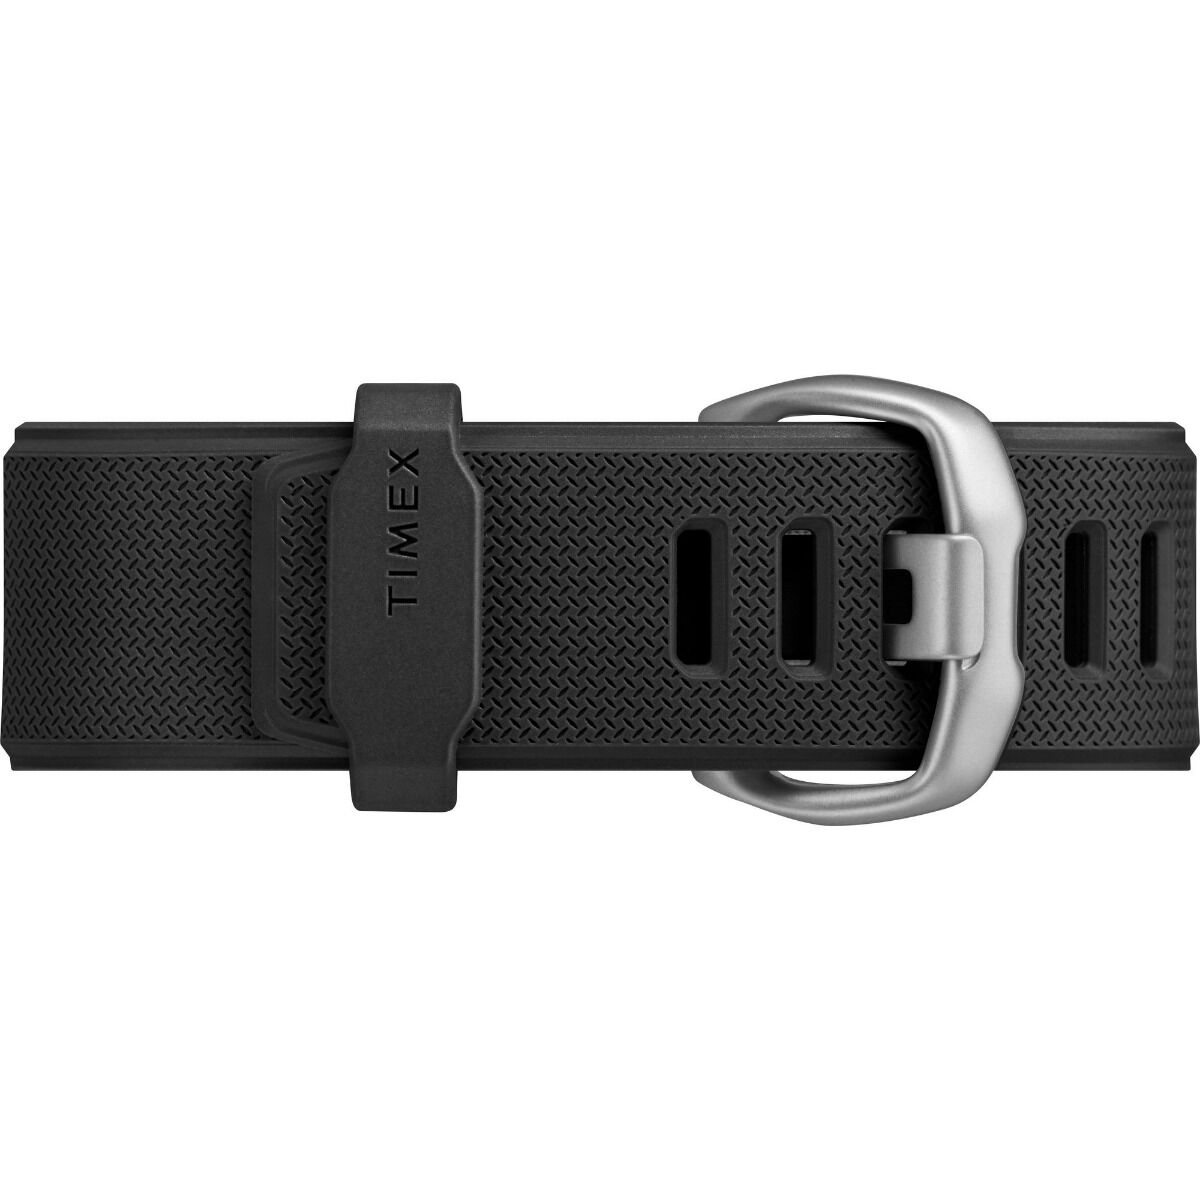 Timex Digital Command Shock 54mm Black Resin Strap Men's Watch TW5M18200